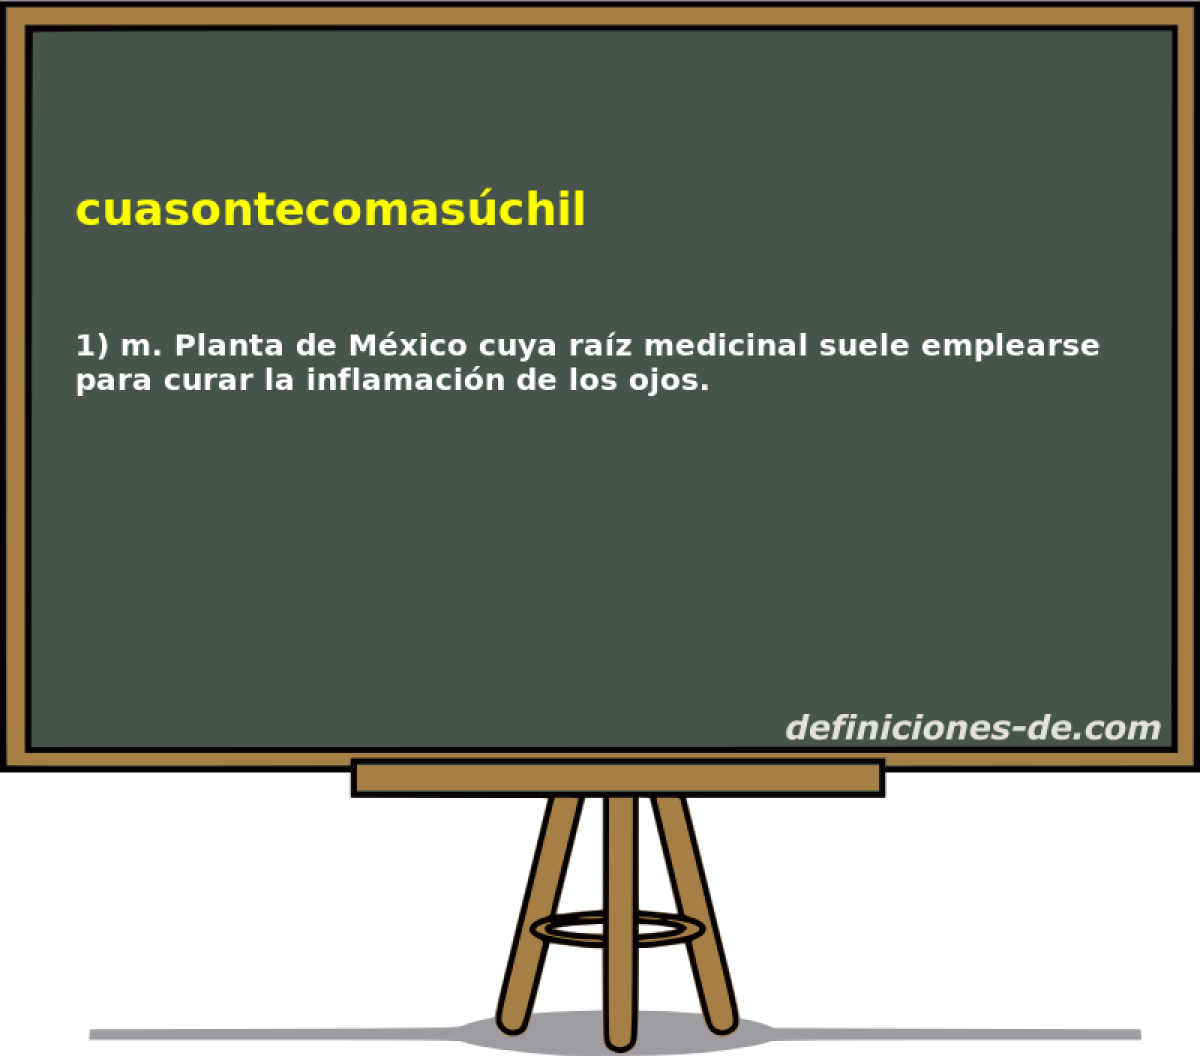 cuasontecomaschil 